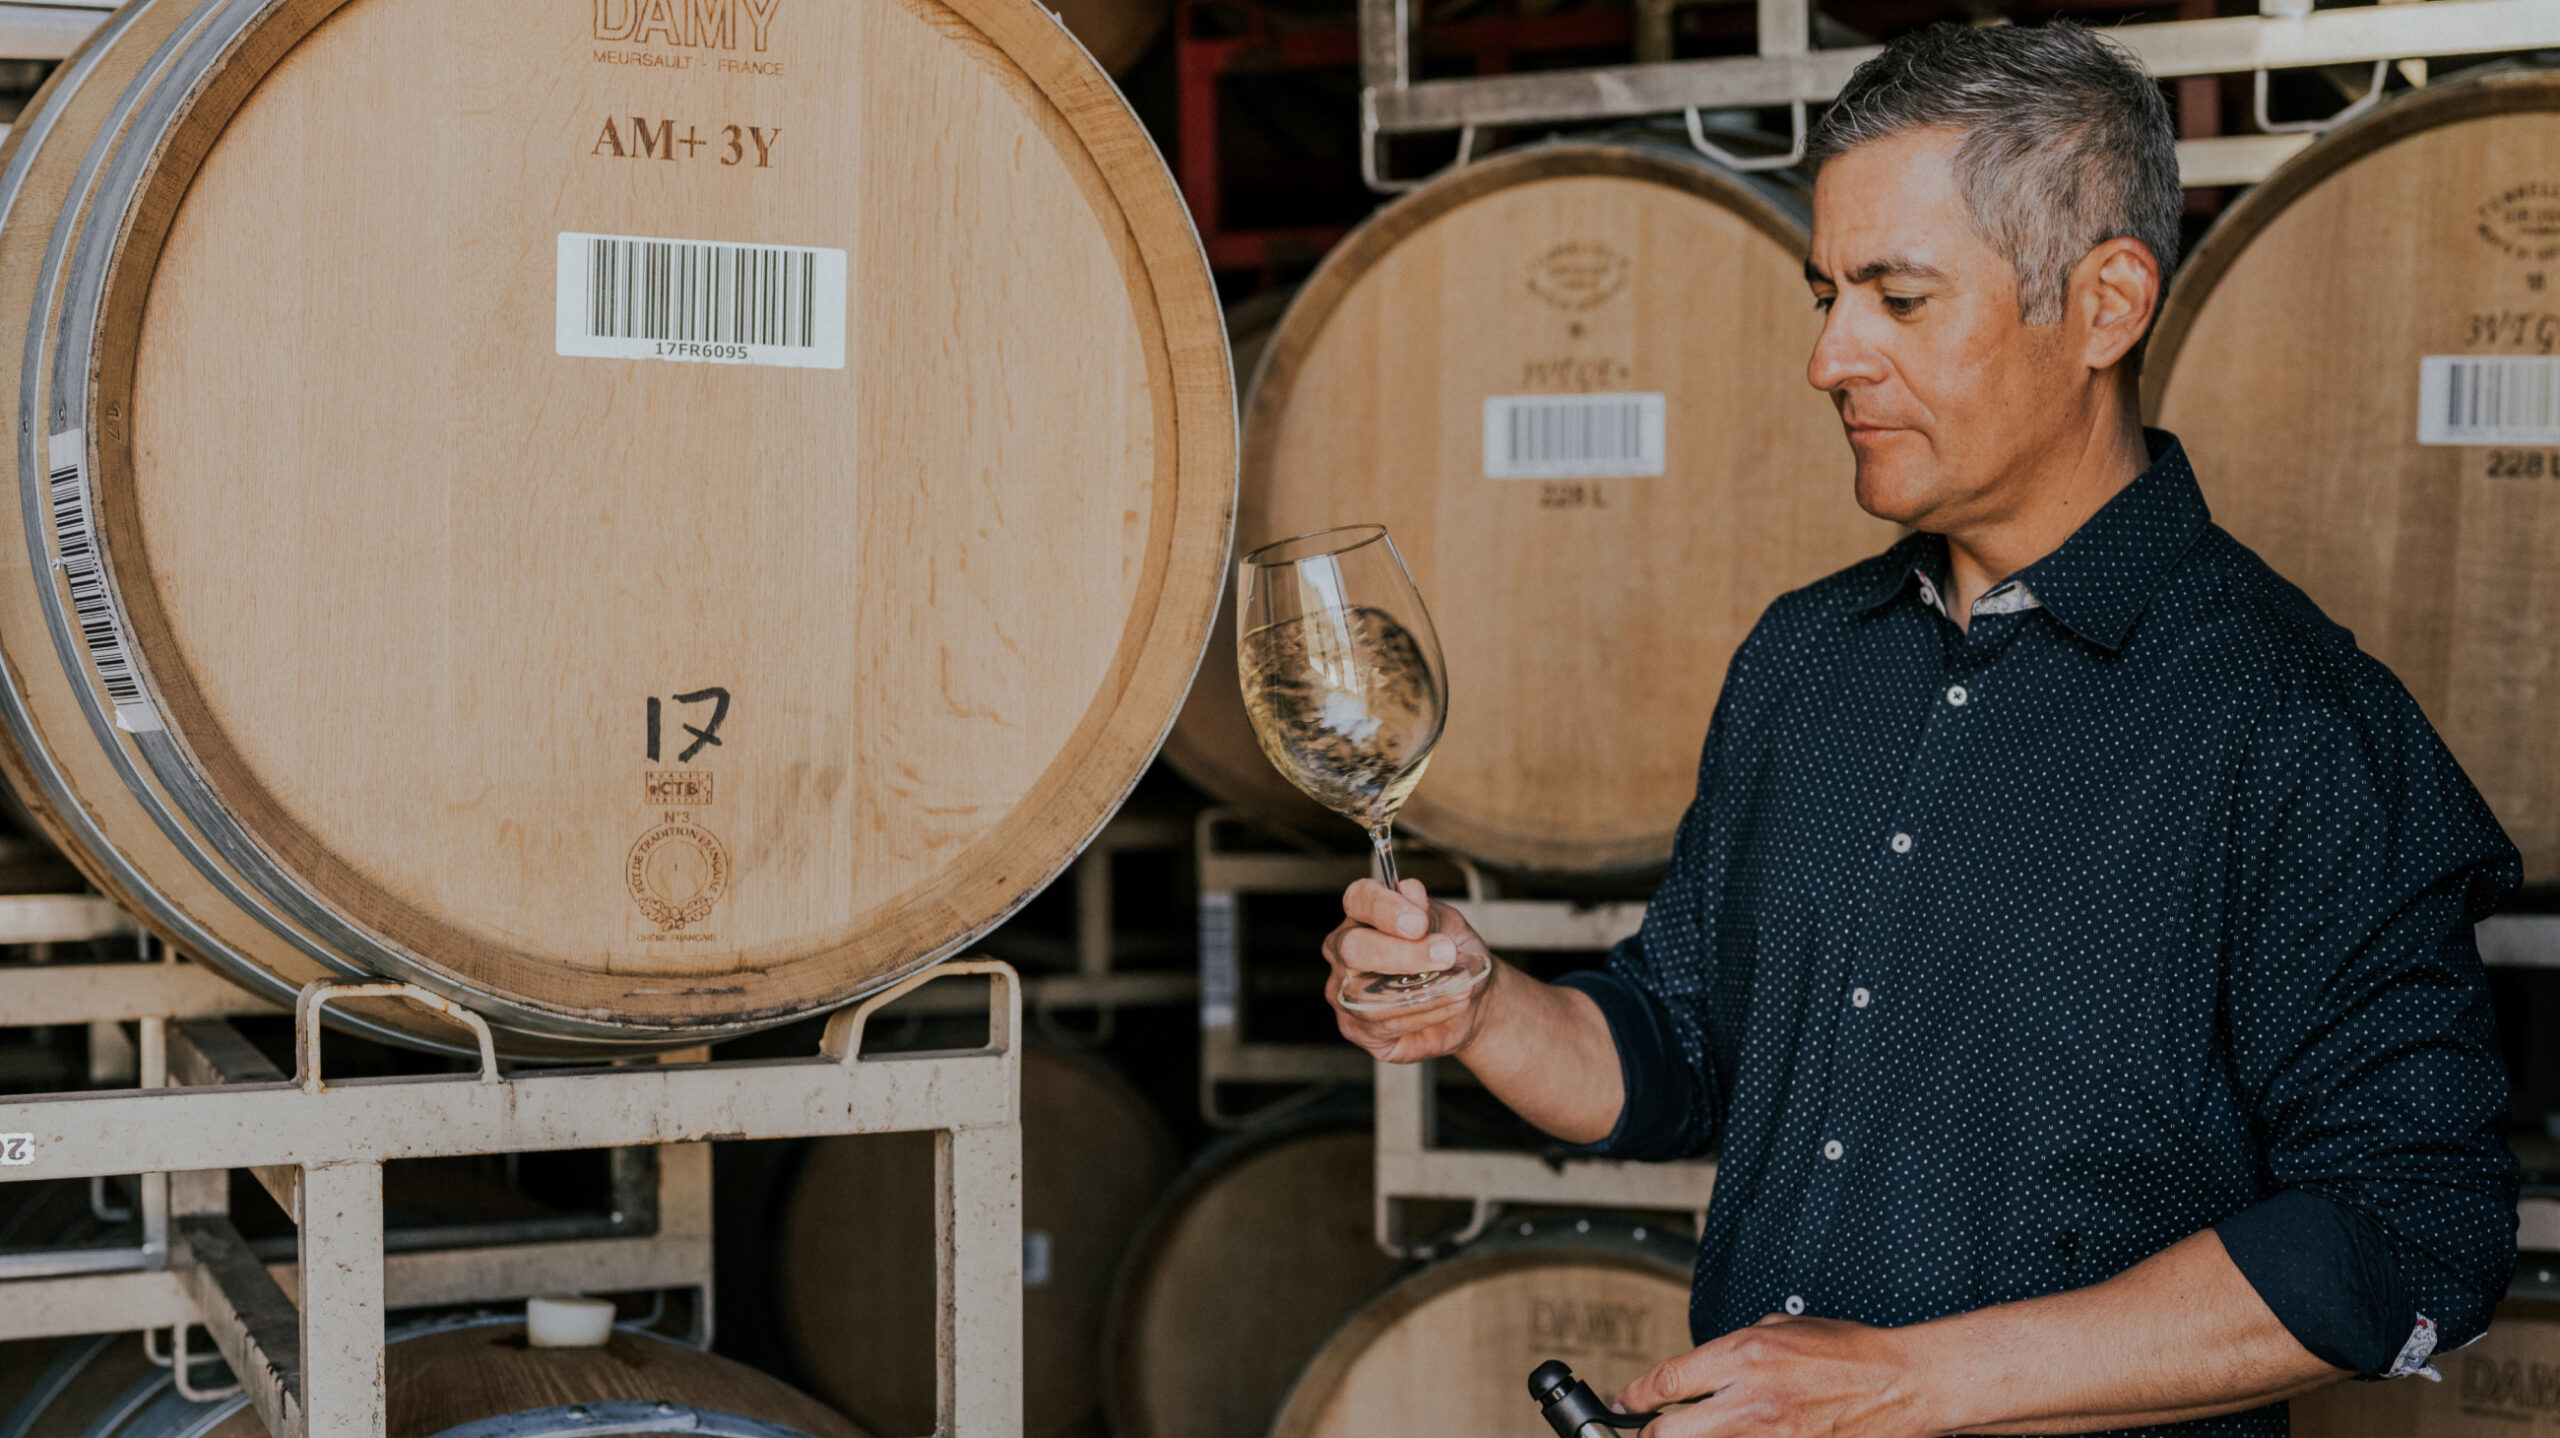 Neyers winemaker Tadeo Borchardt swirling wine in a glass in front of rows of wine barrels